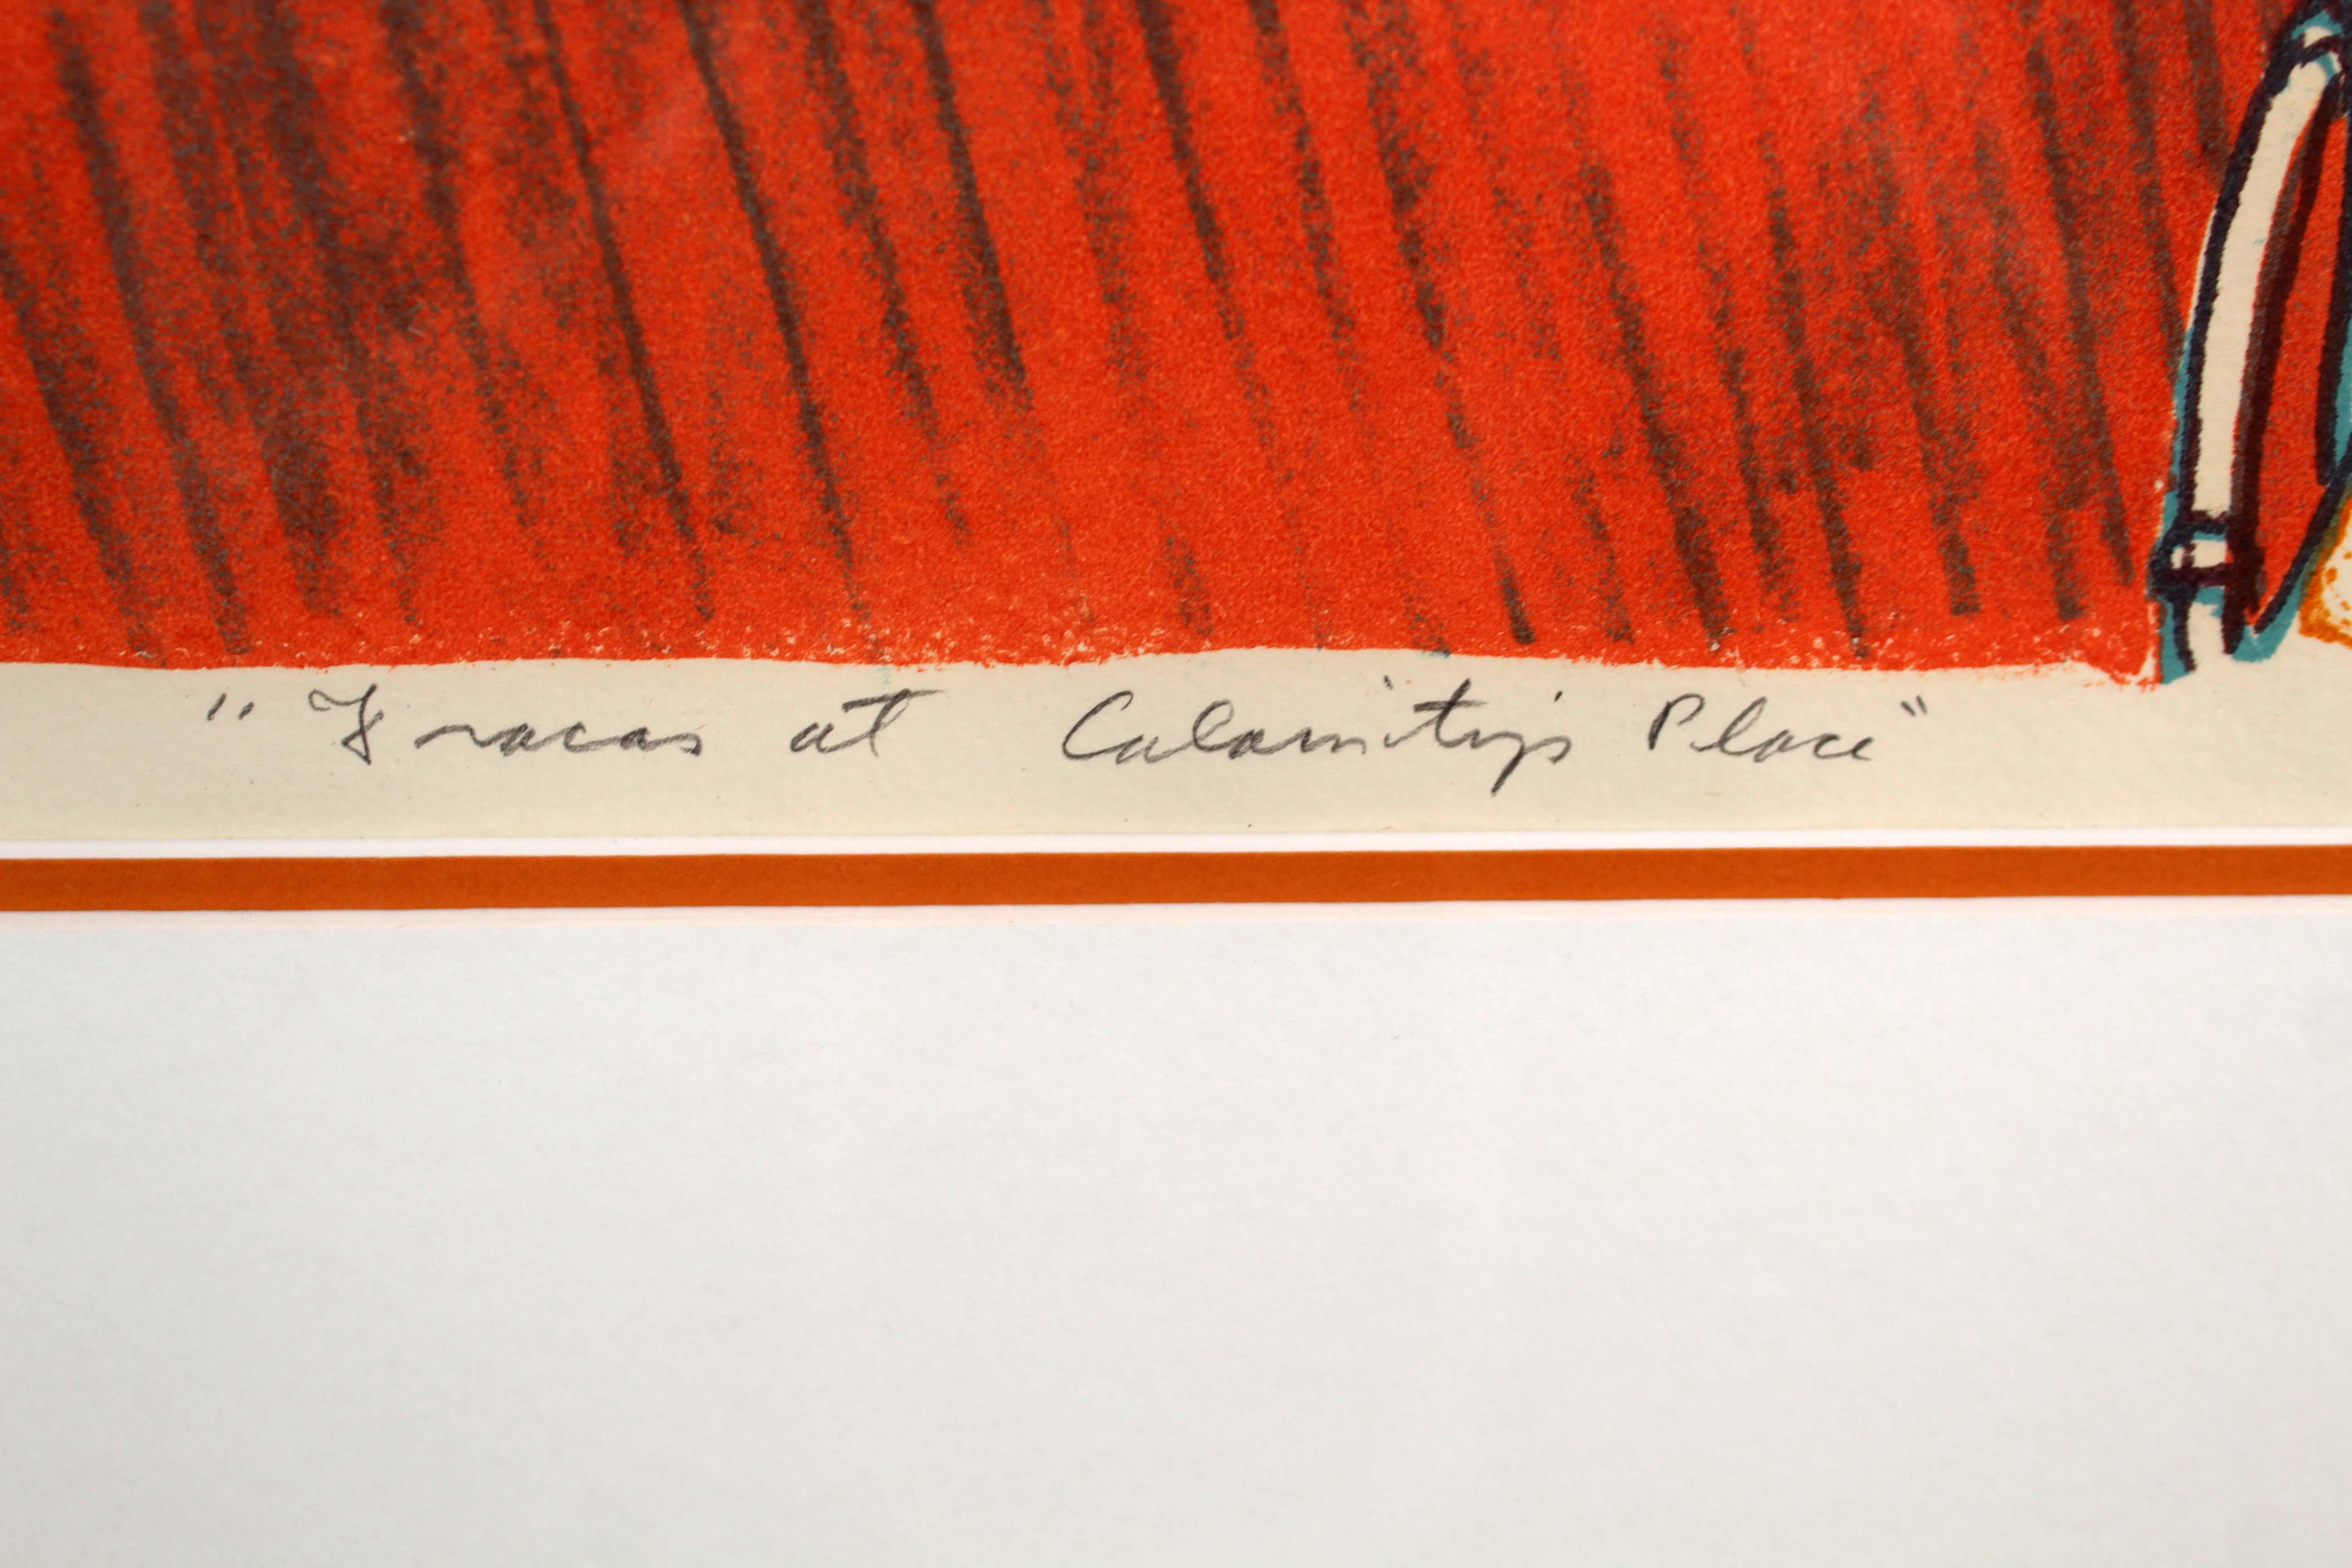 Warrington Colescott Frances at Calamity’s Place 1969 Signed Lithograph 29/40 6